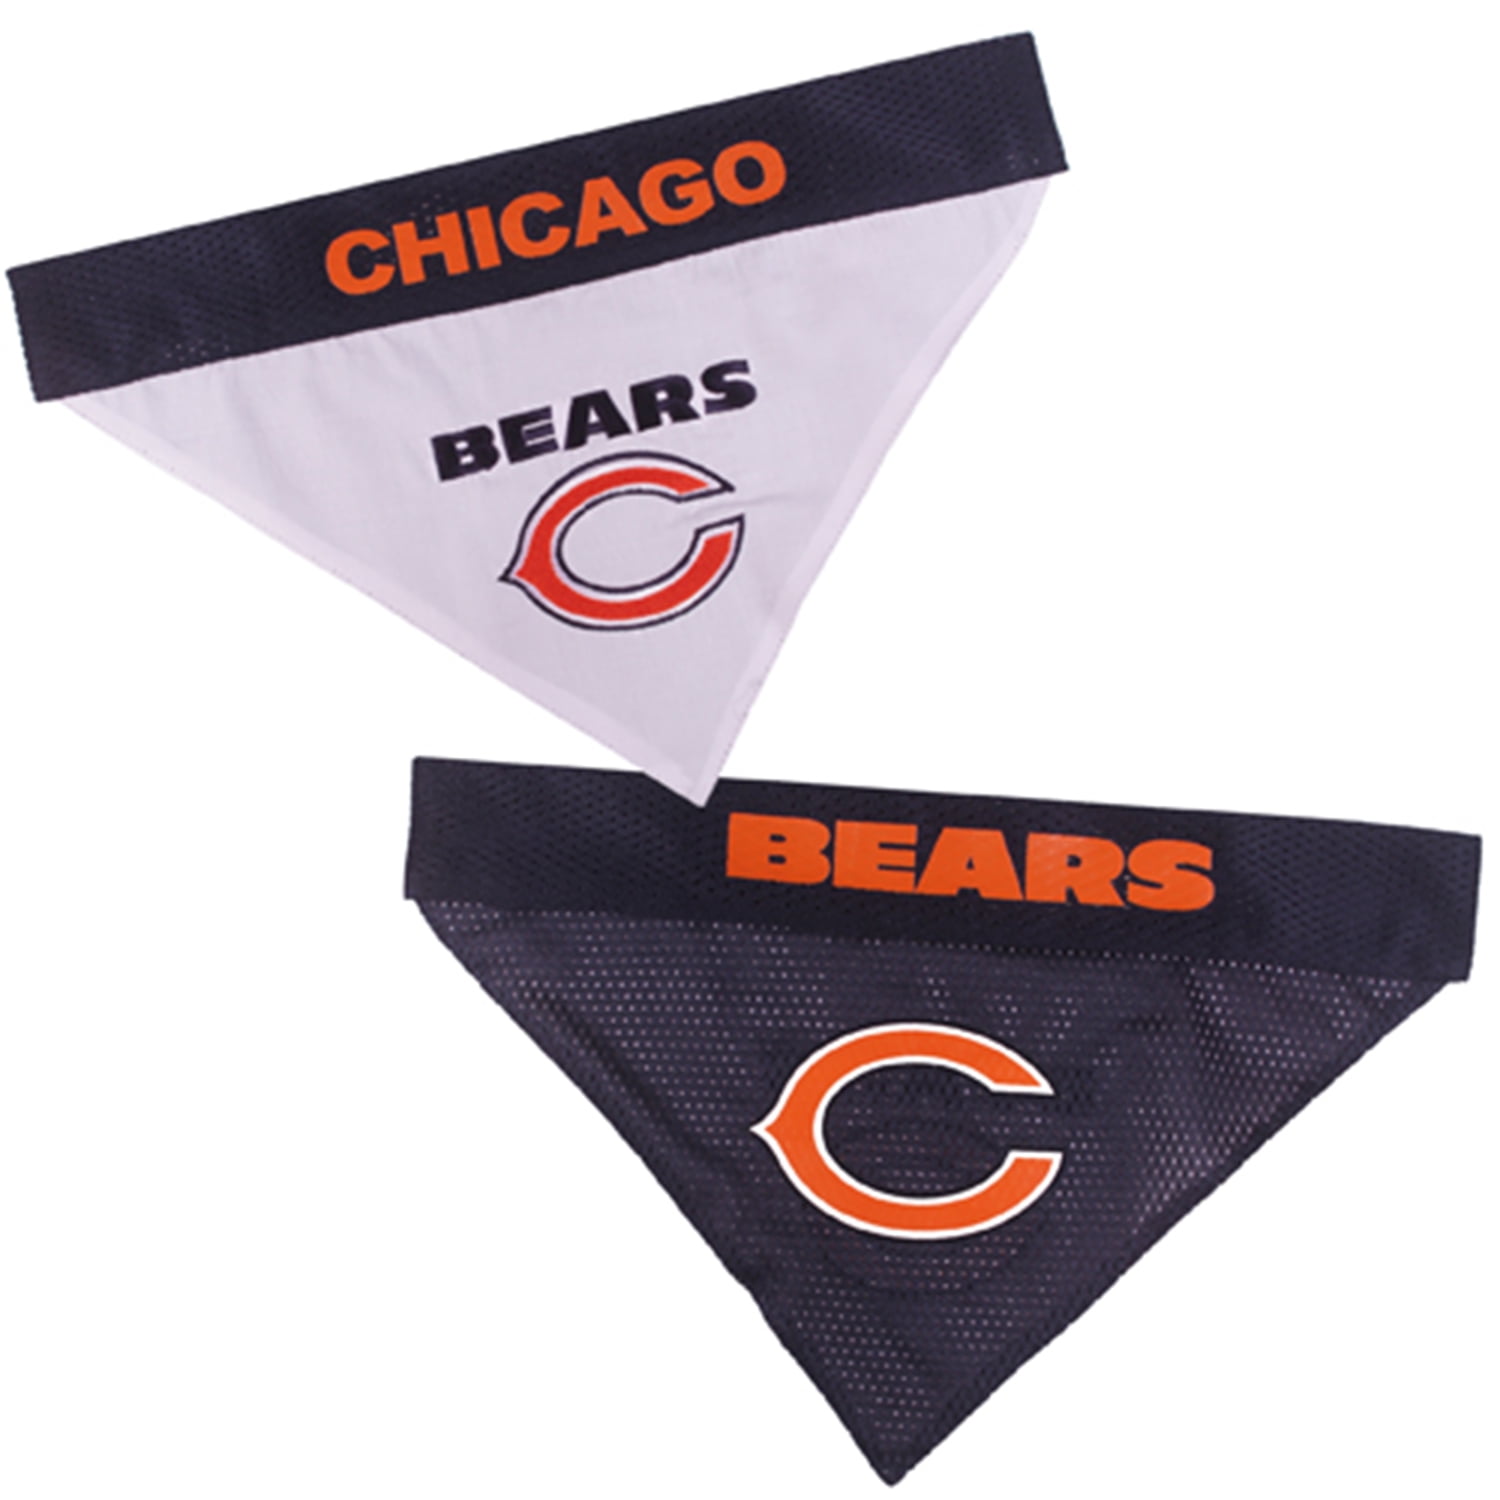 Chicago Bears bandana